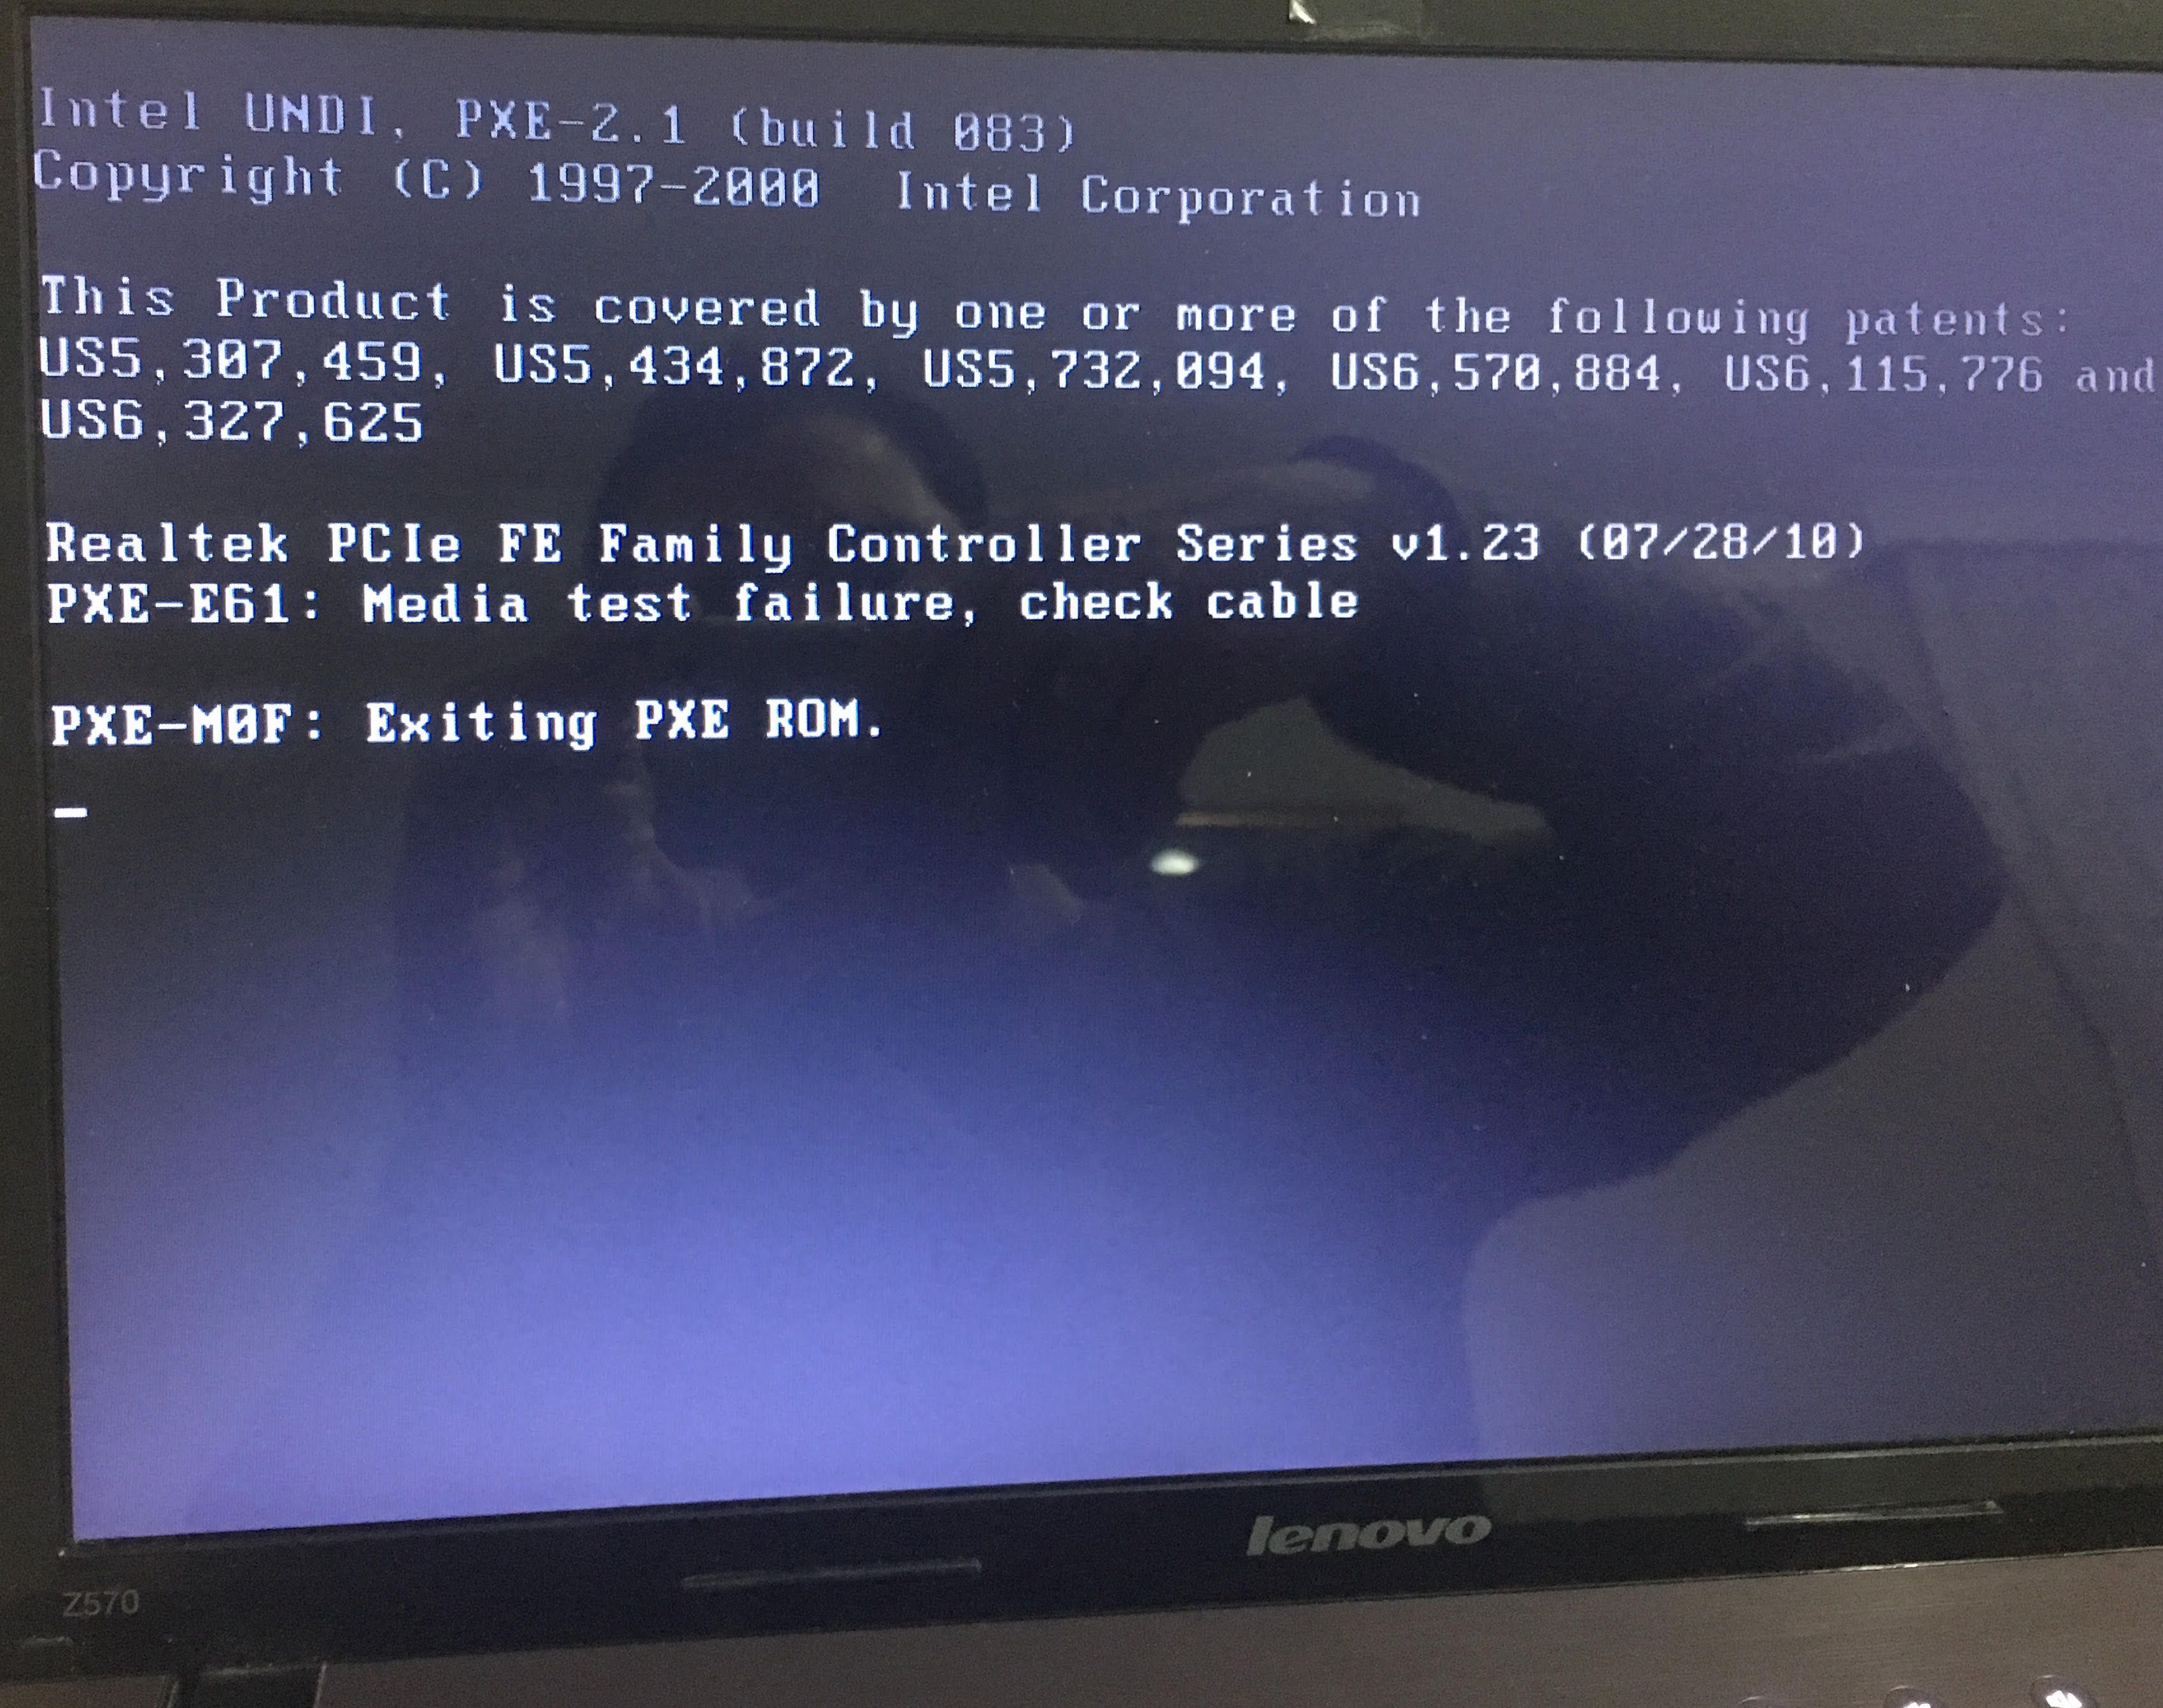 Linux pxe. PXE 61 ноутбук. PXE Lenovo. PXE-e61 Media Test failure check Cable. Exiting PXE ROM на ноутбуке.